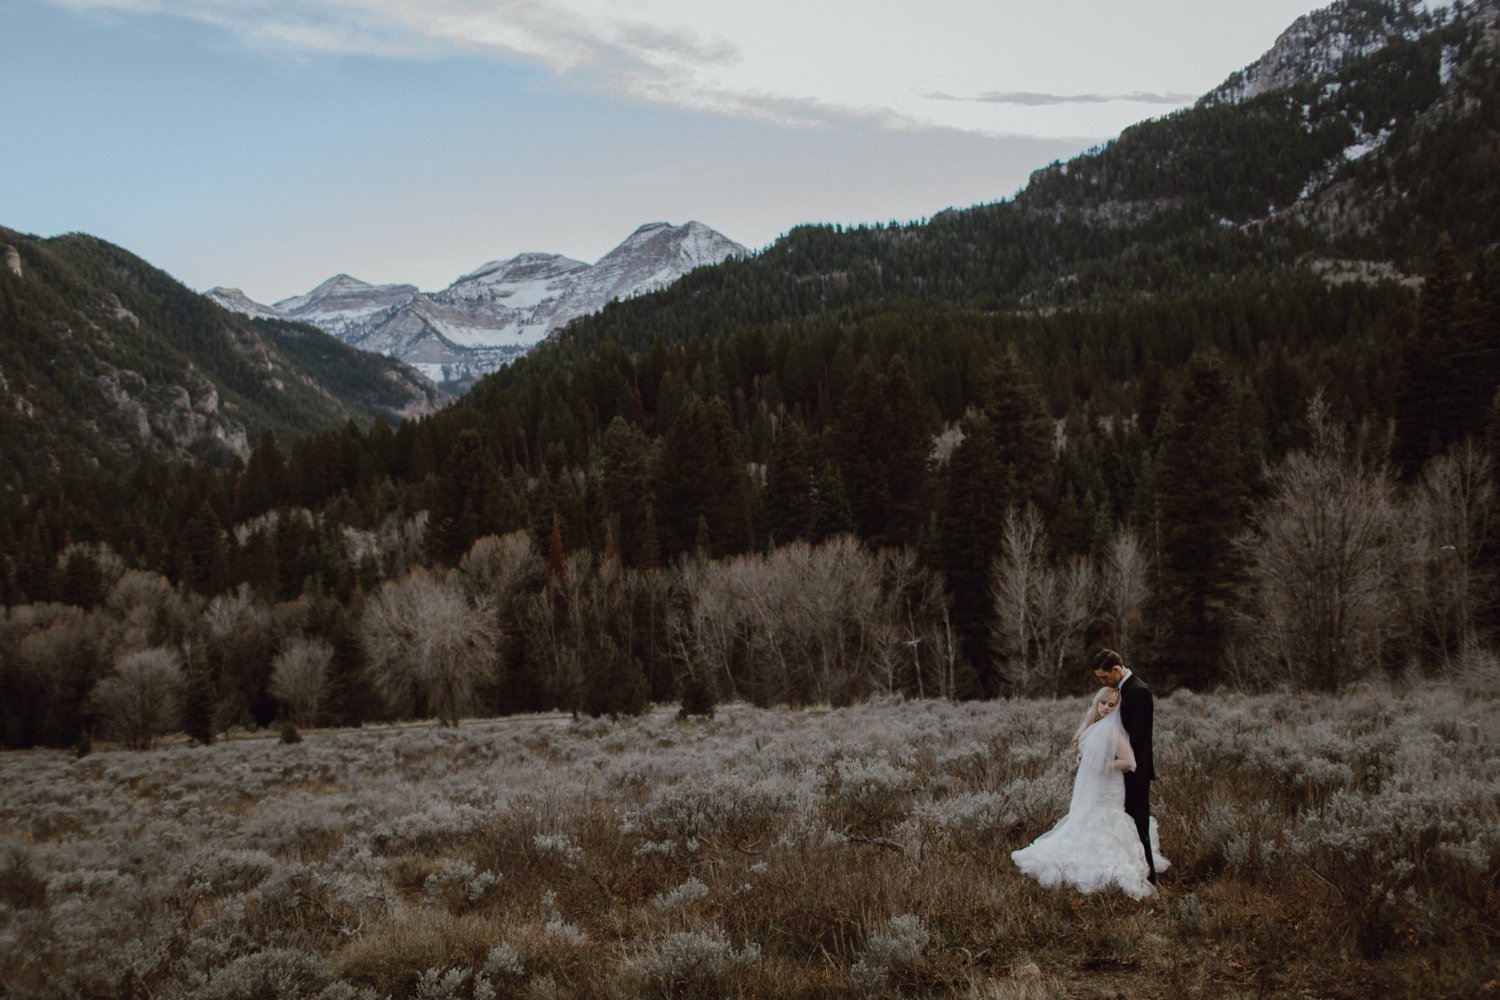 Adventurous wedding photography in a canyon